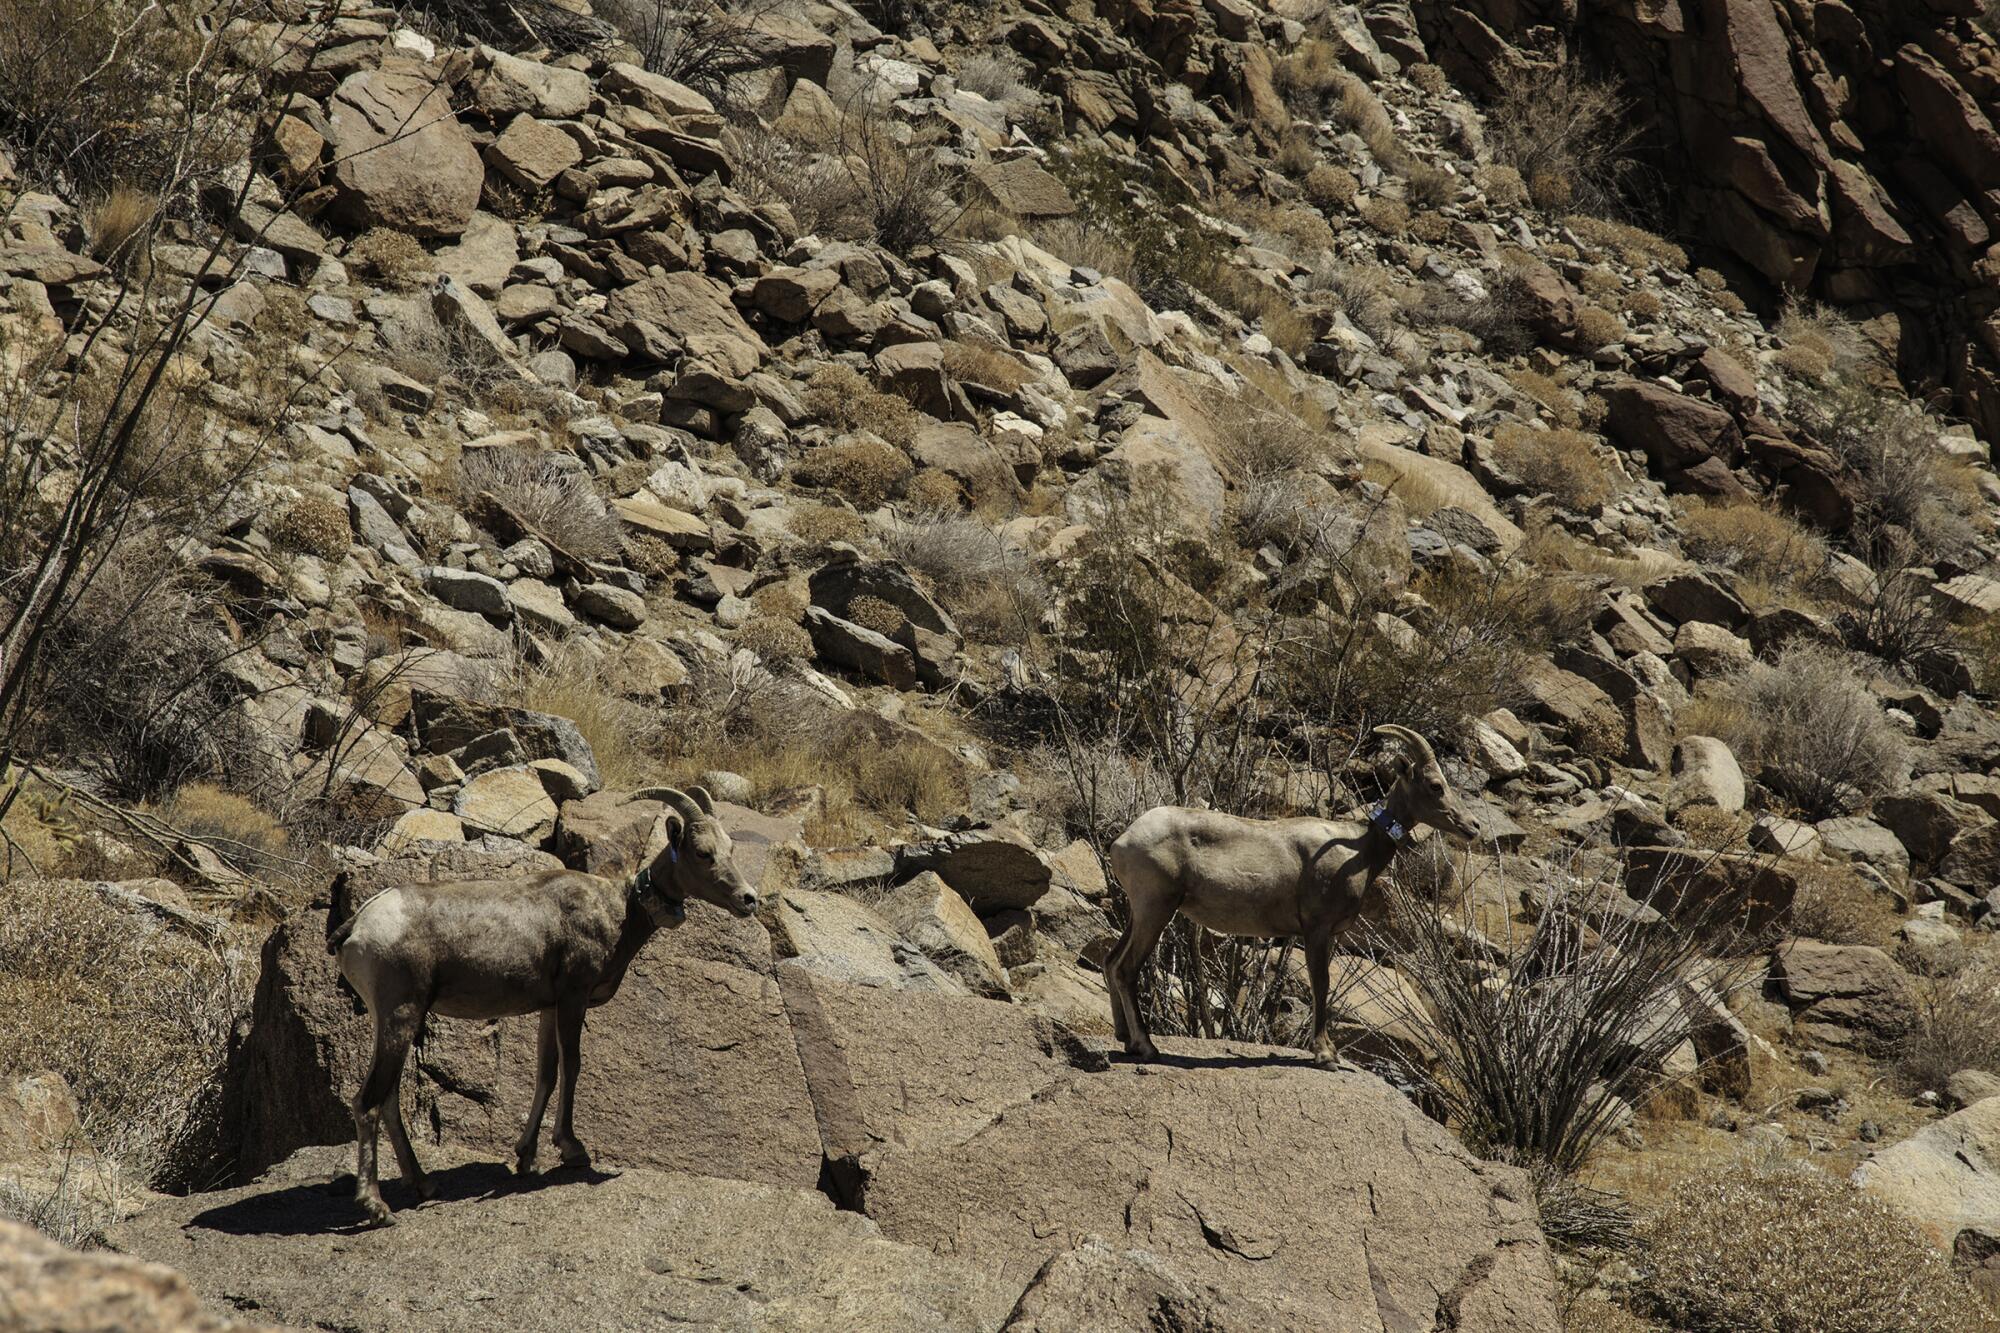 Two collared bighorn ewes walk on rocks.